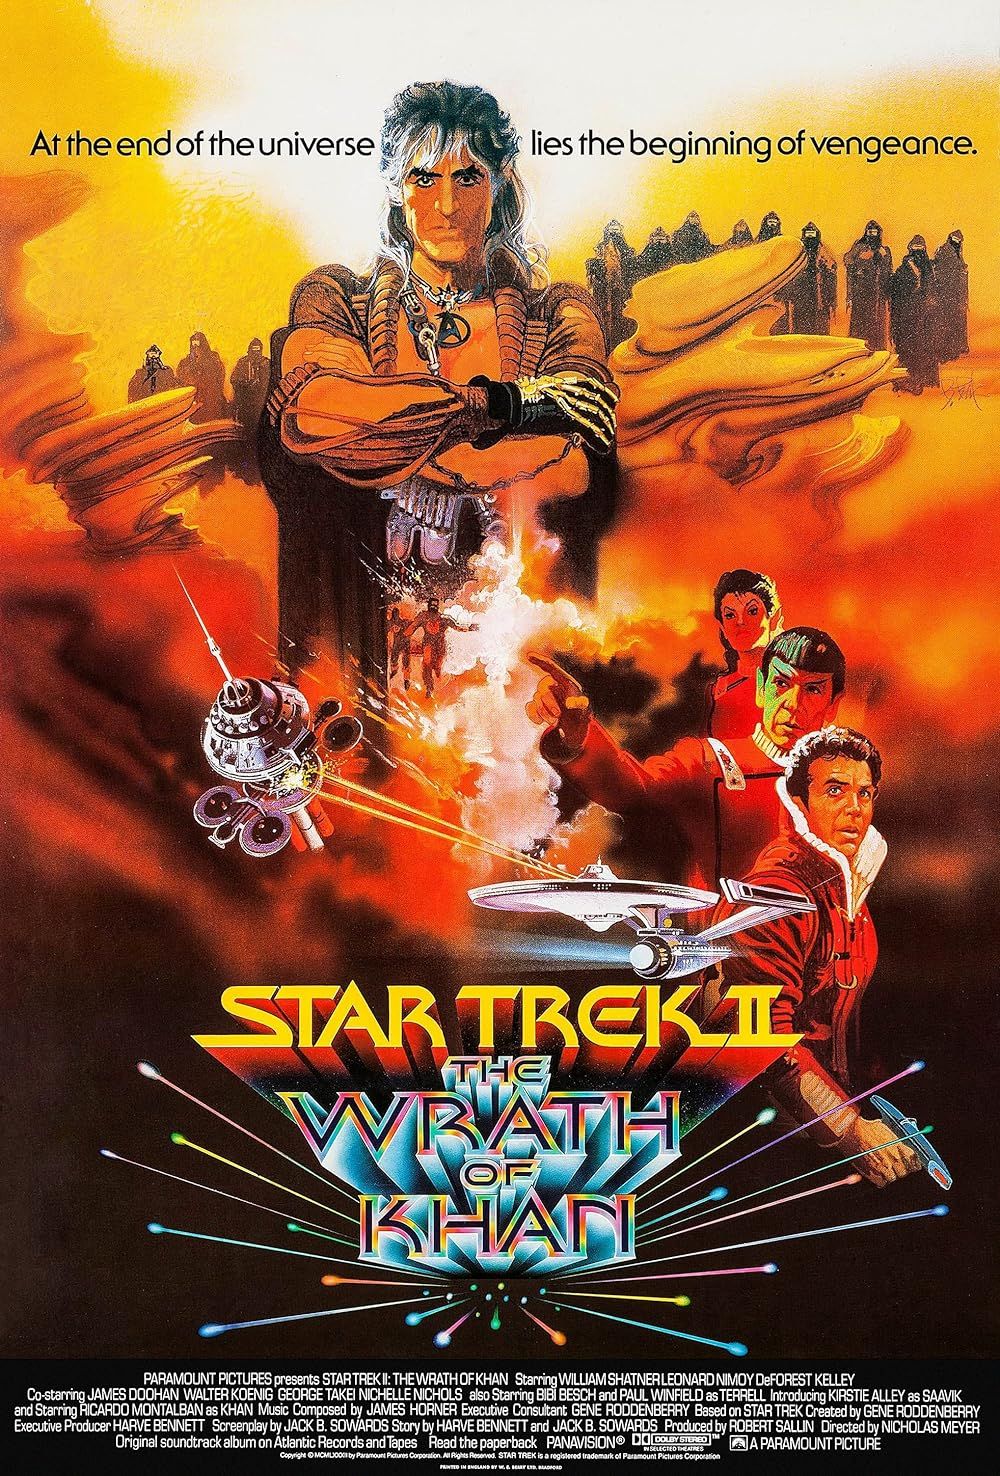 The Cast on the Star Trek II Wrath of Khan Poster